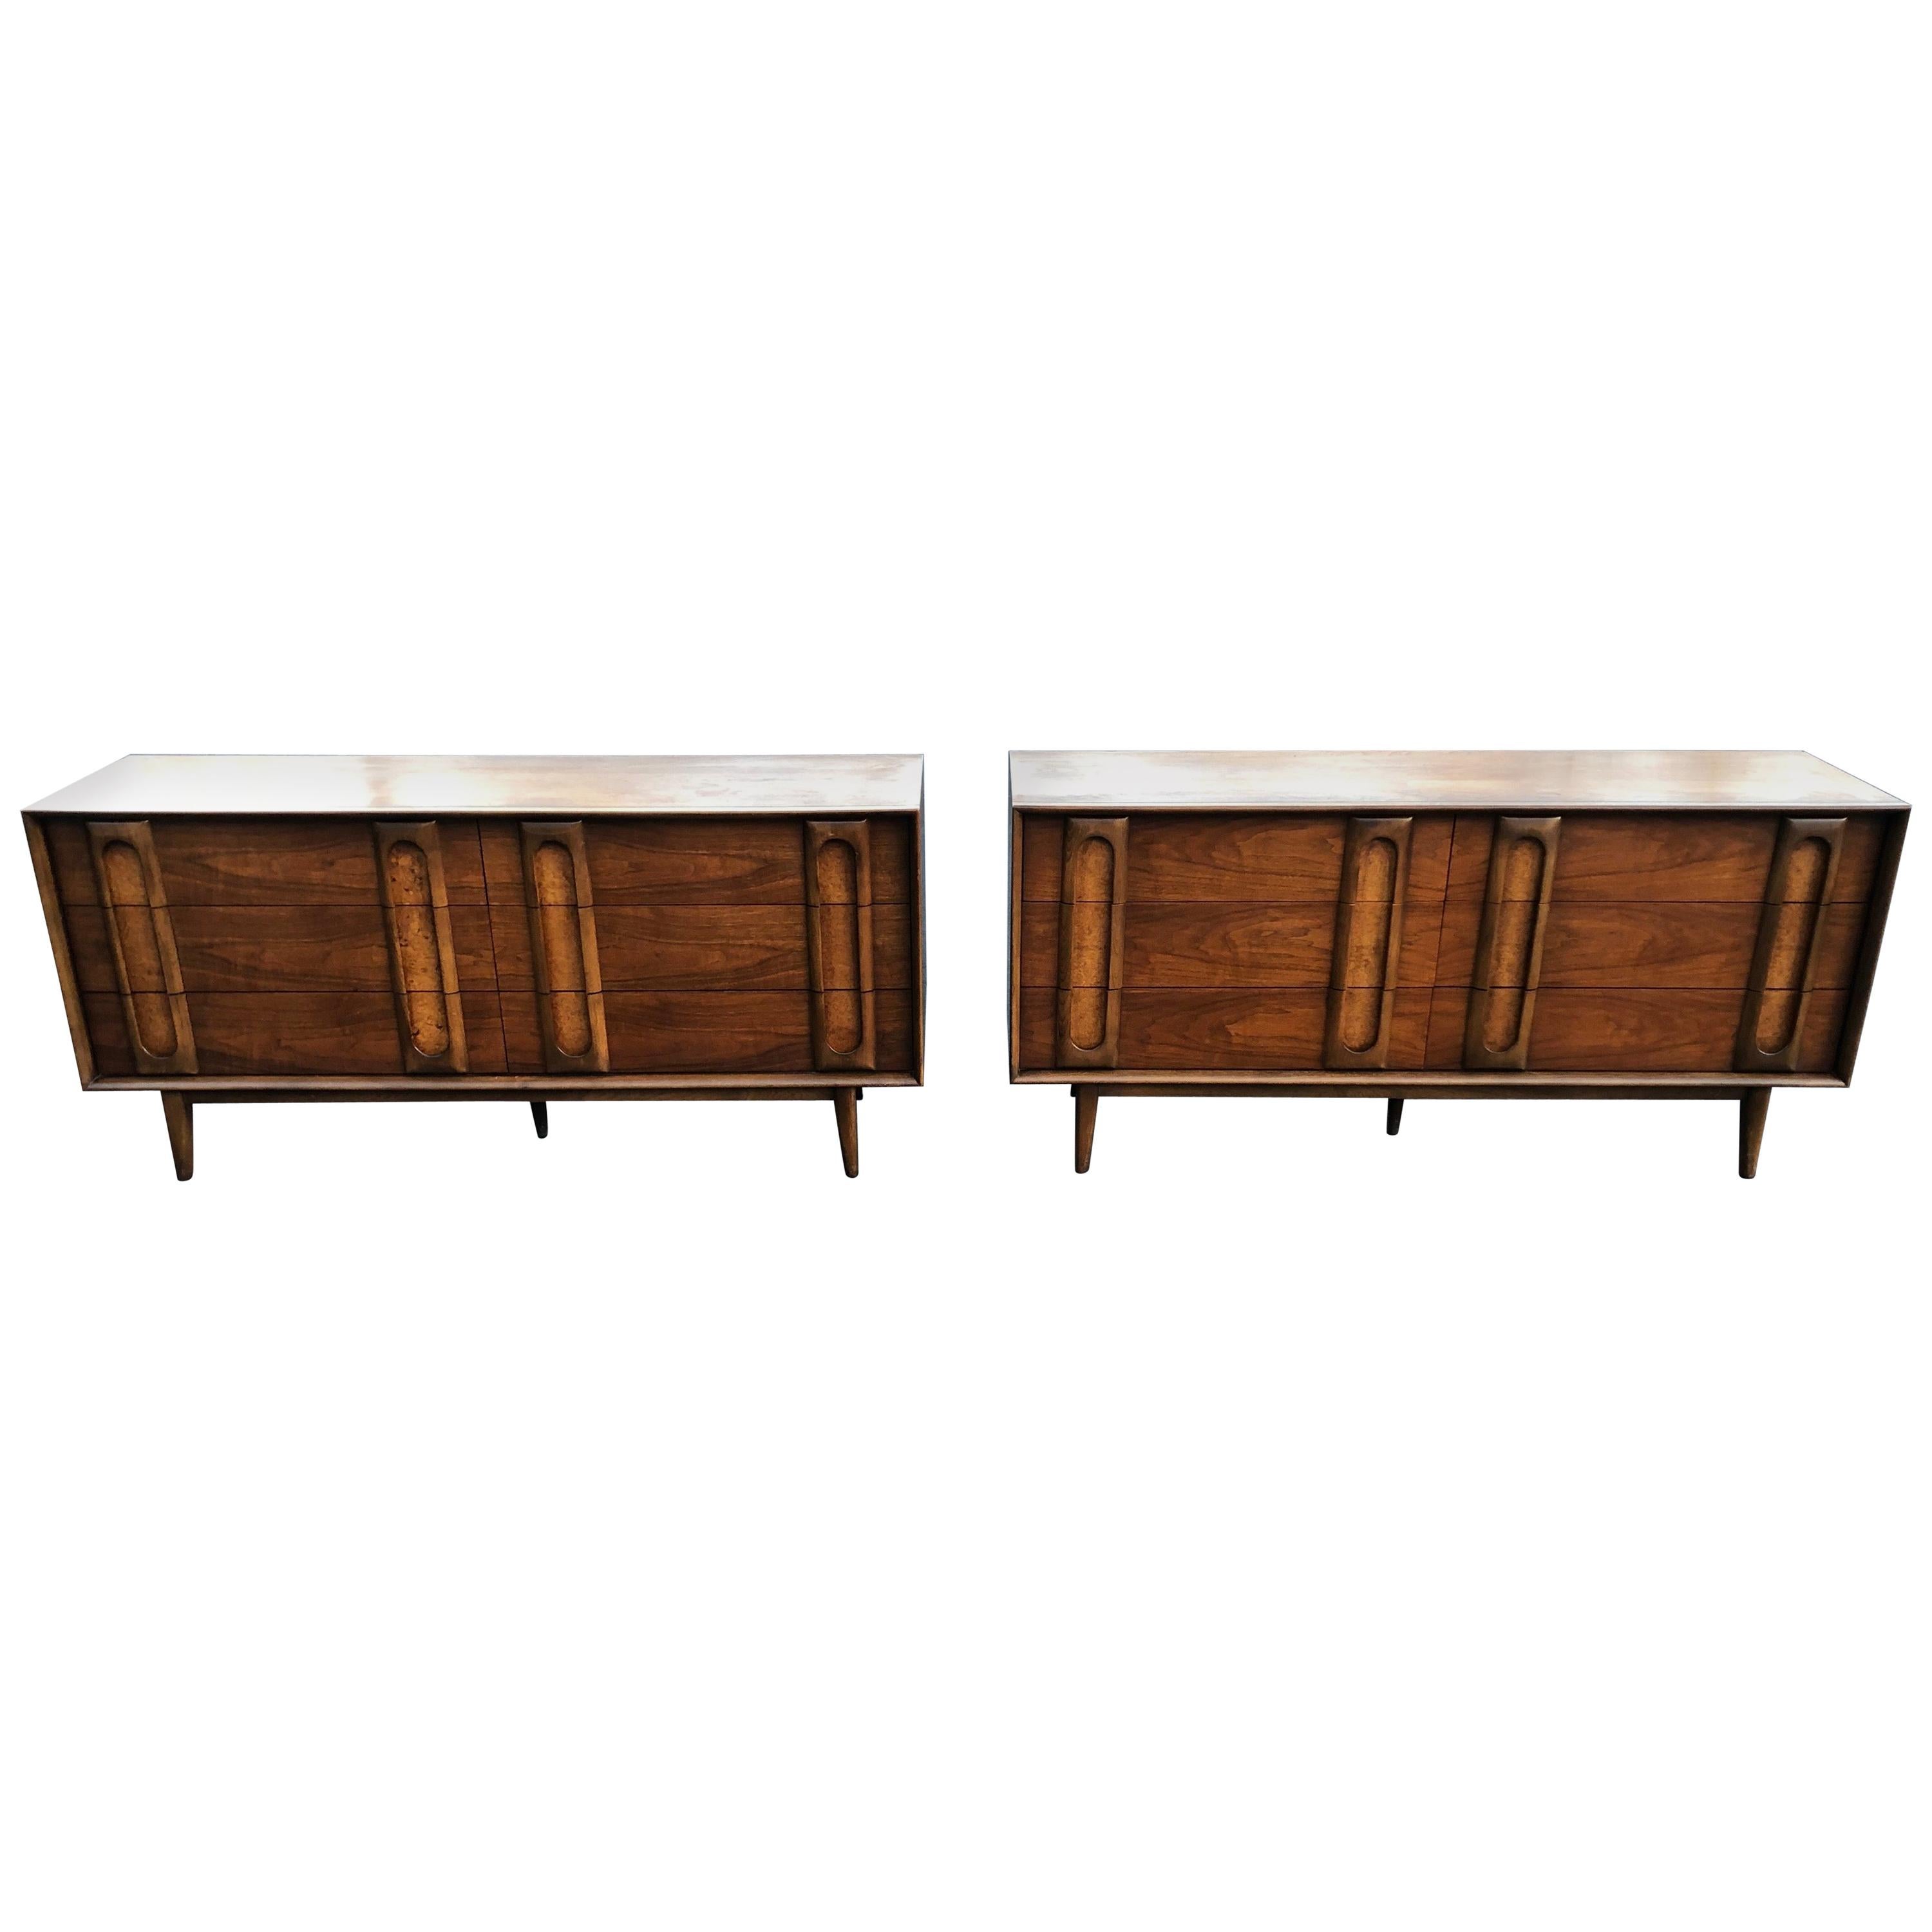 Pair of Mid-Century Modern Dressers by Lane